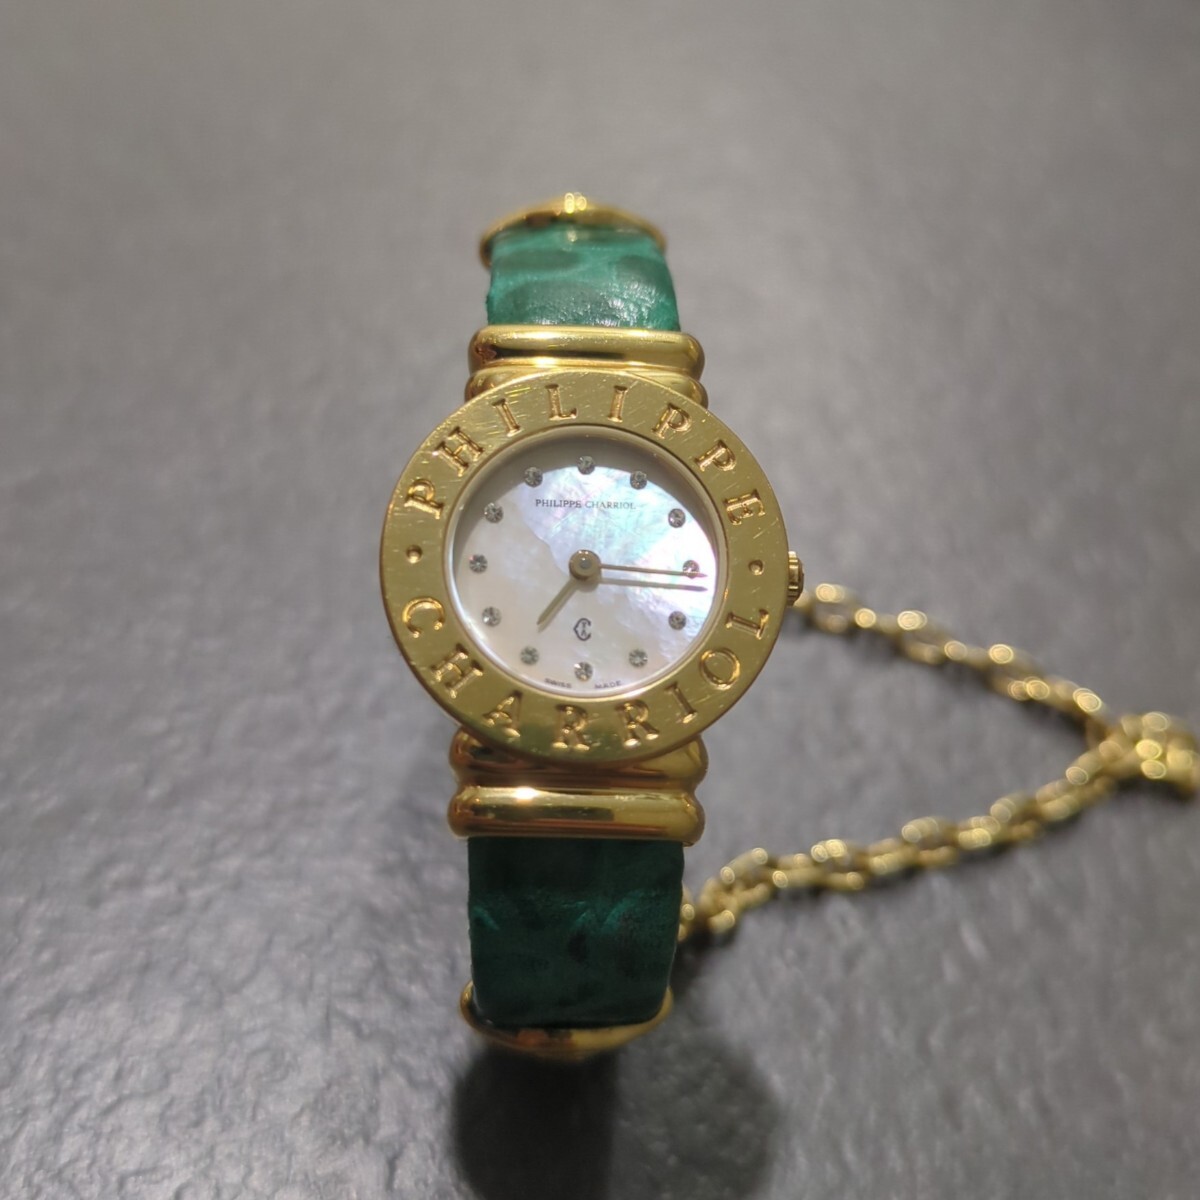  прекрасный товар работа товар PHILIPPE CHARRIOL Philip Charriol солнечный Toro pe наручные часы Gold зеленый женский кварц ракушка циферблат 